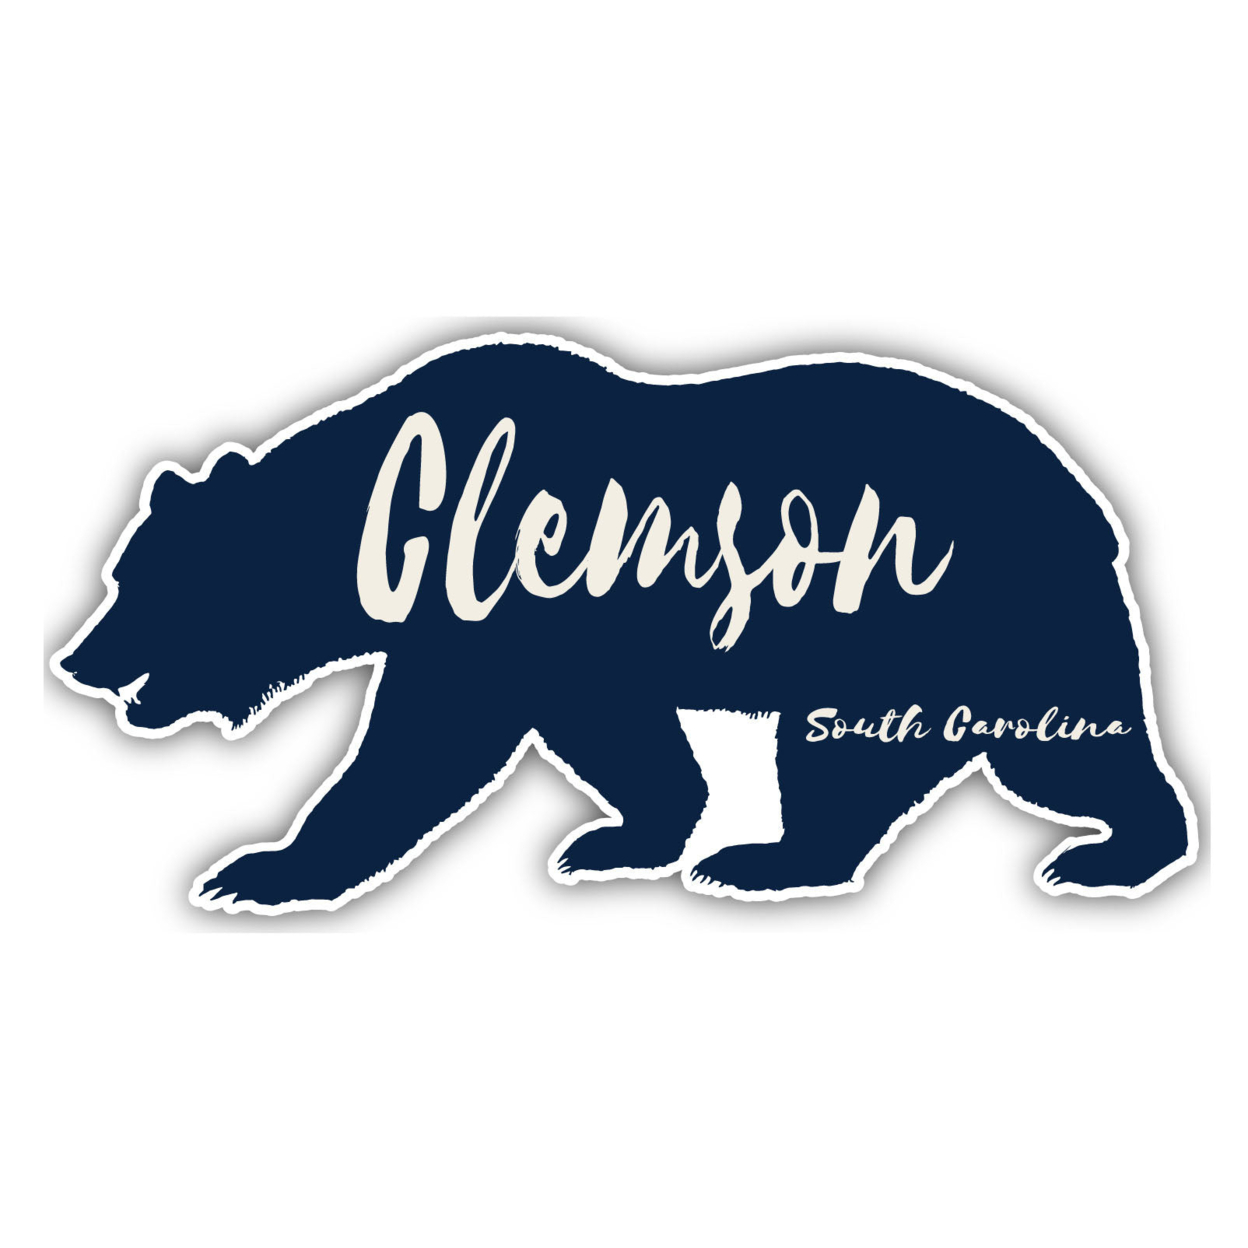 Clemson South Carolina Souvenir Decorative Stickers (Choose Theme And Size) - Single Unit, 8-Inch, Camp Life